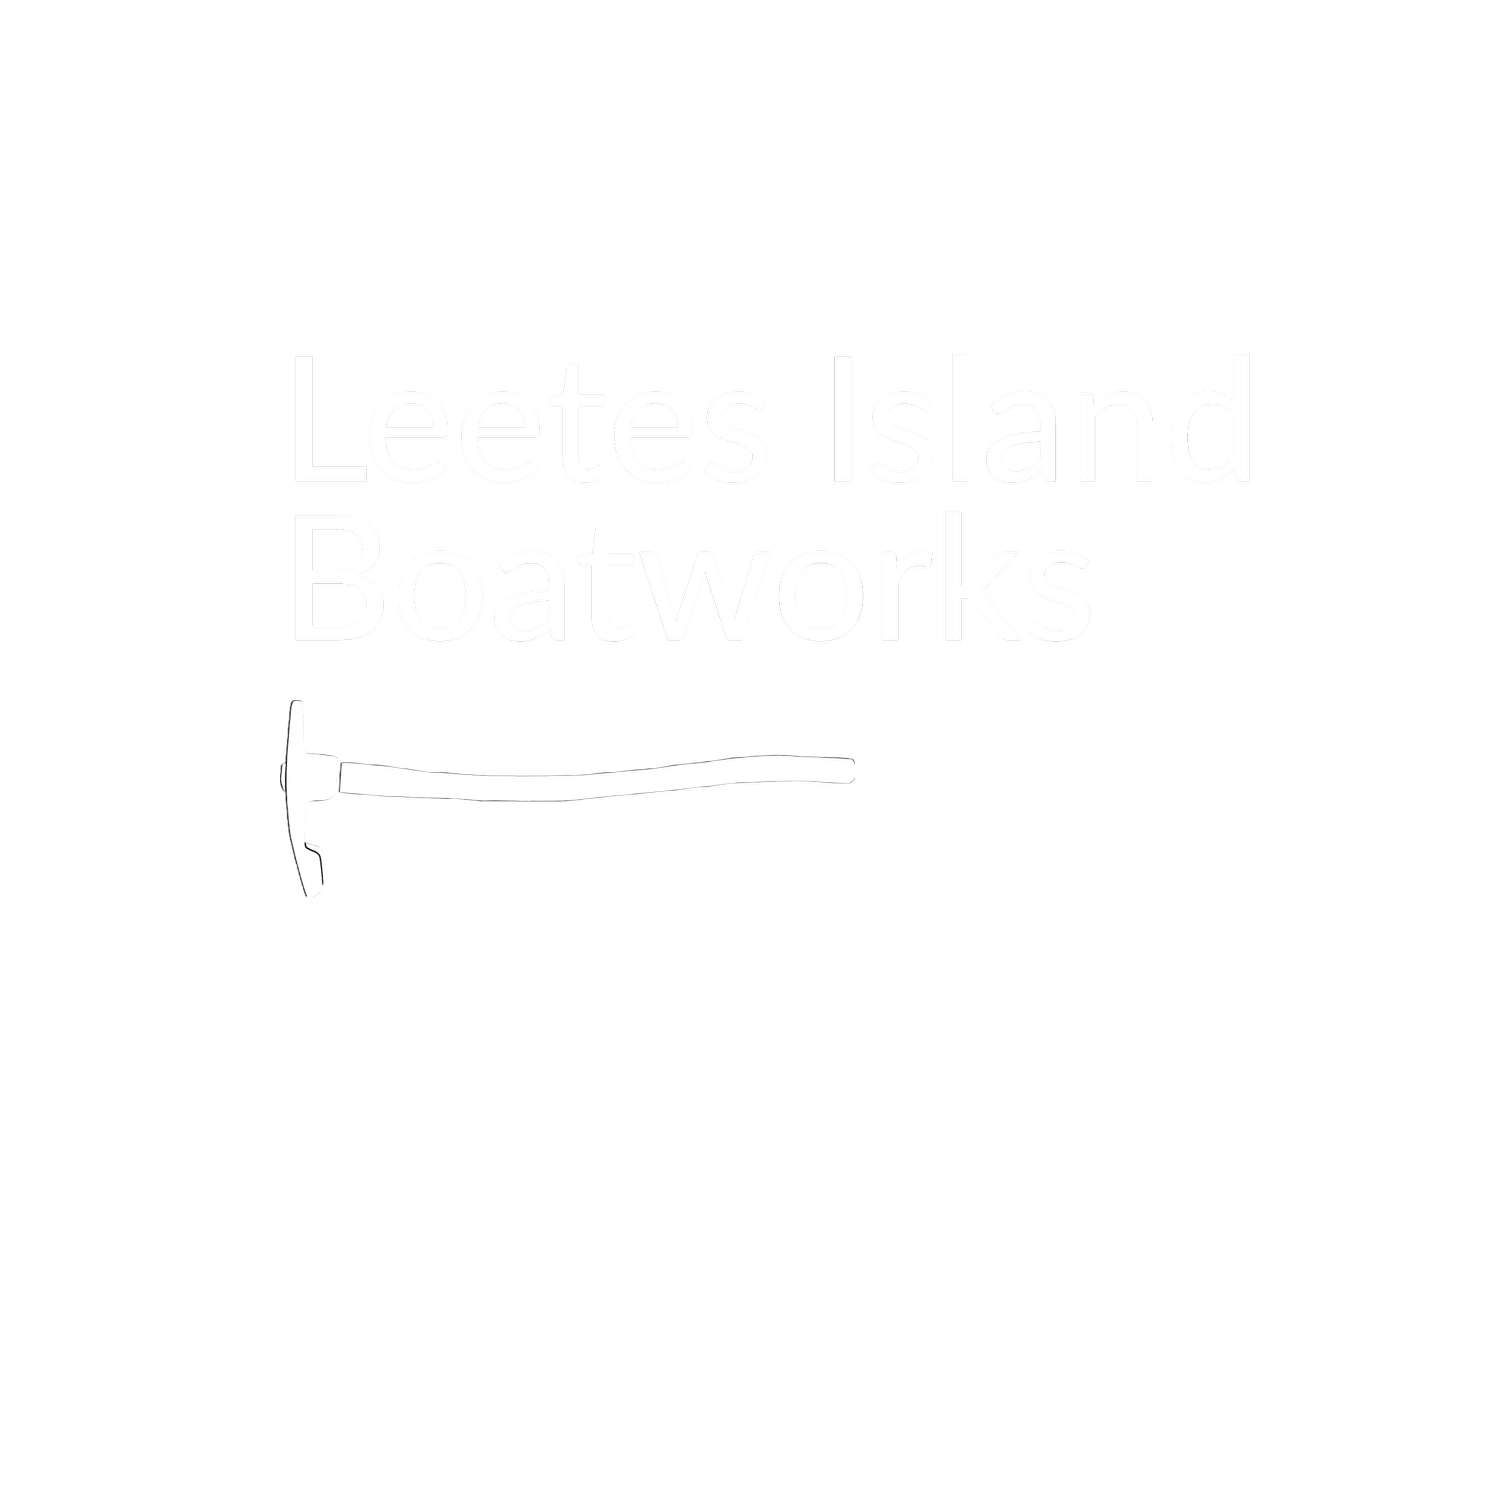 LEETES ISLAND BOATWORKS